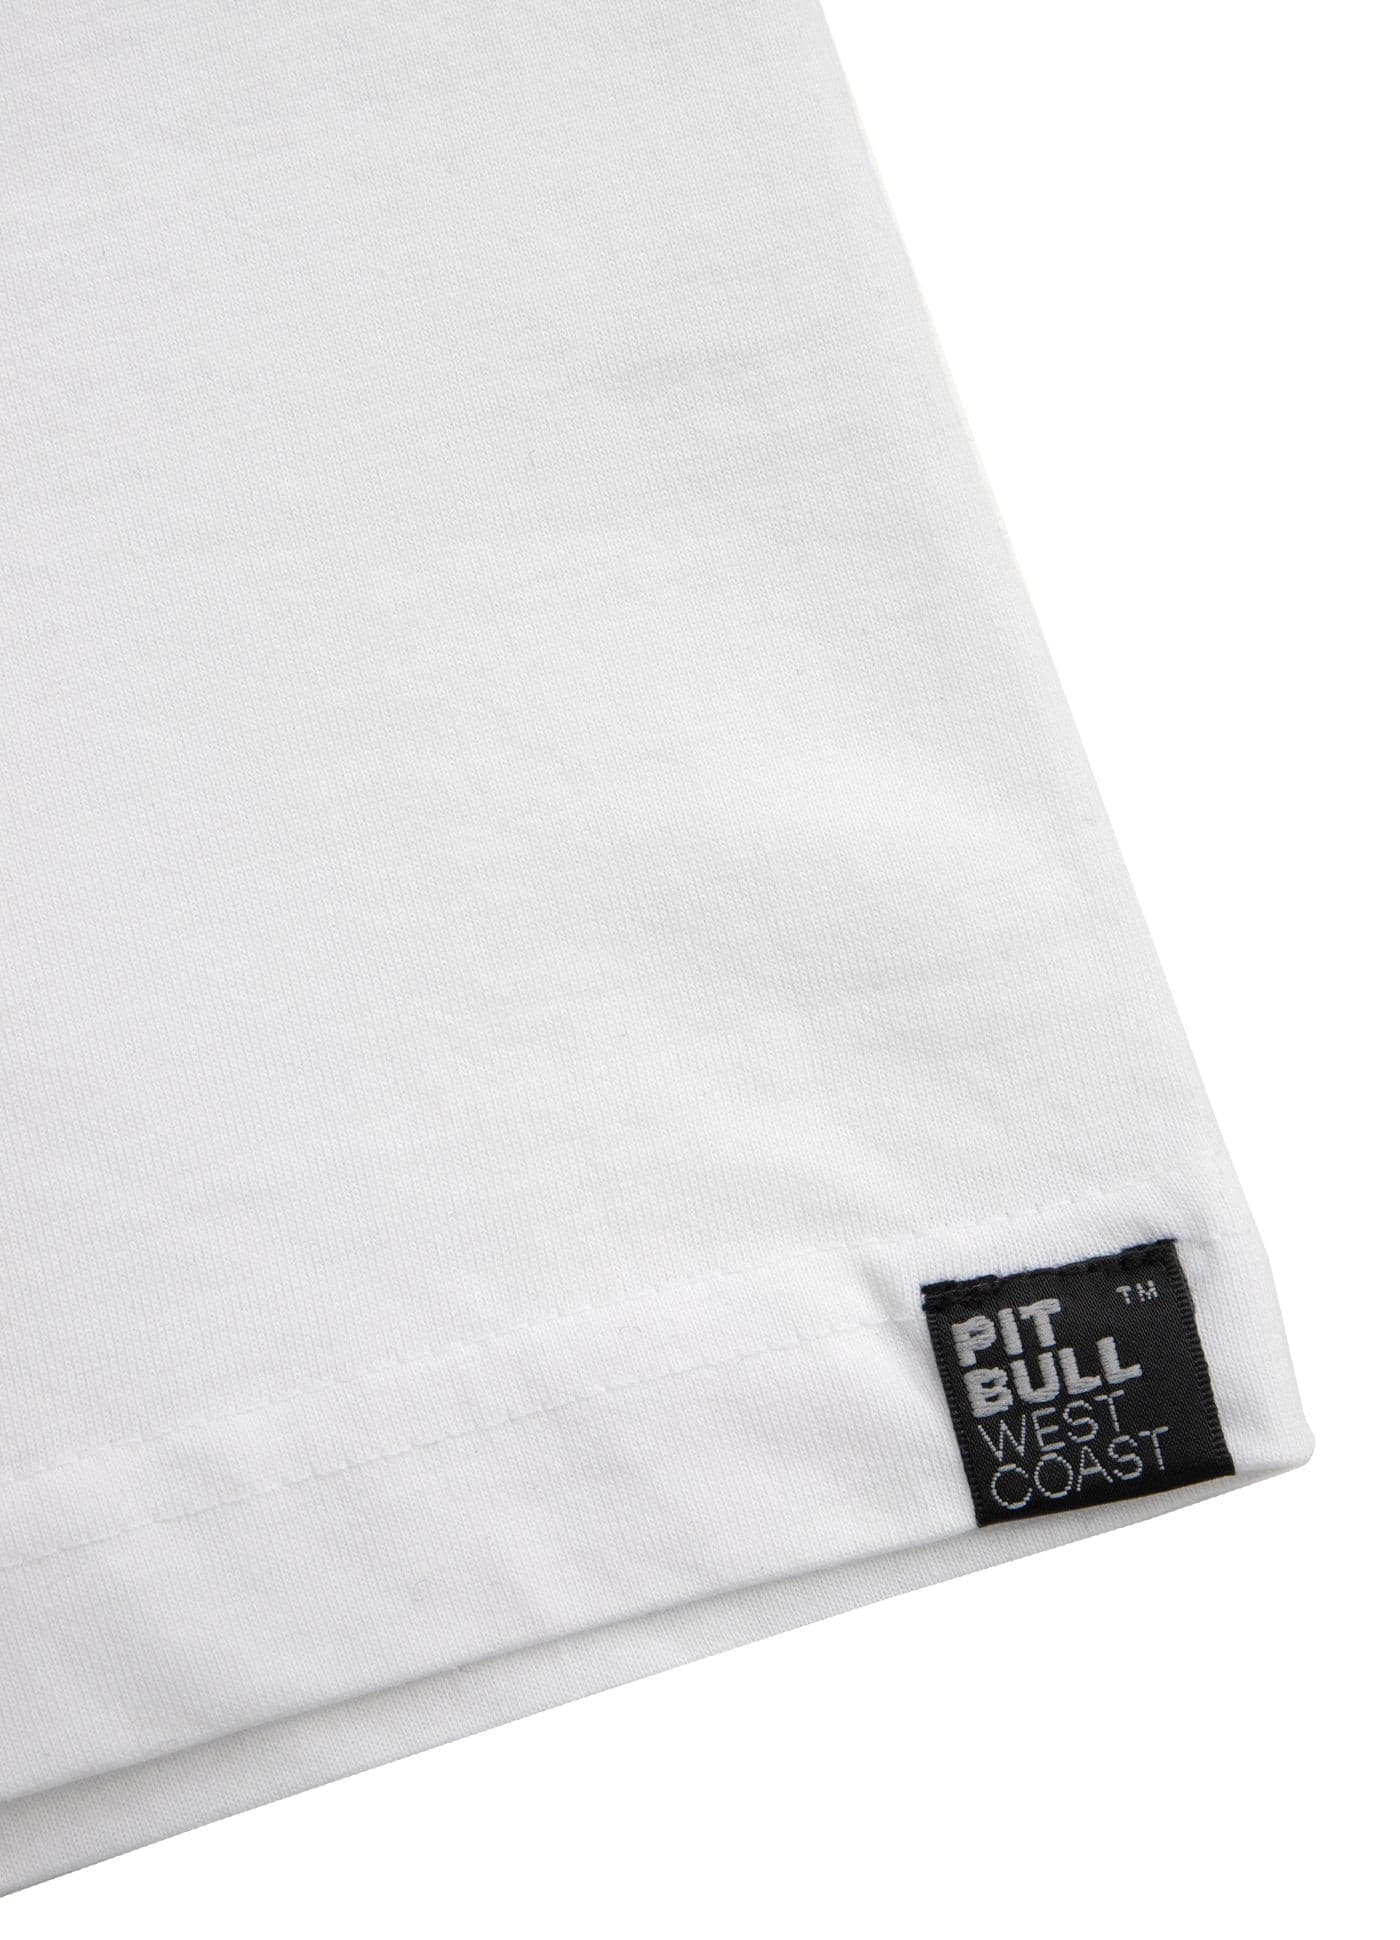 PITBULL USA Lightweight White T-shirt 